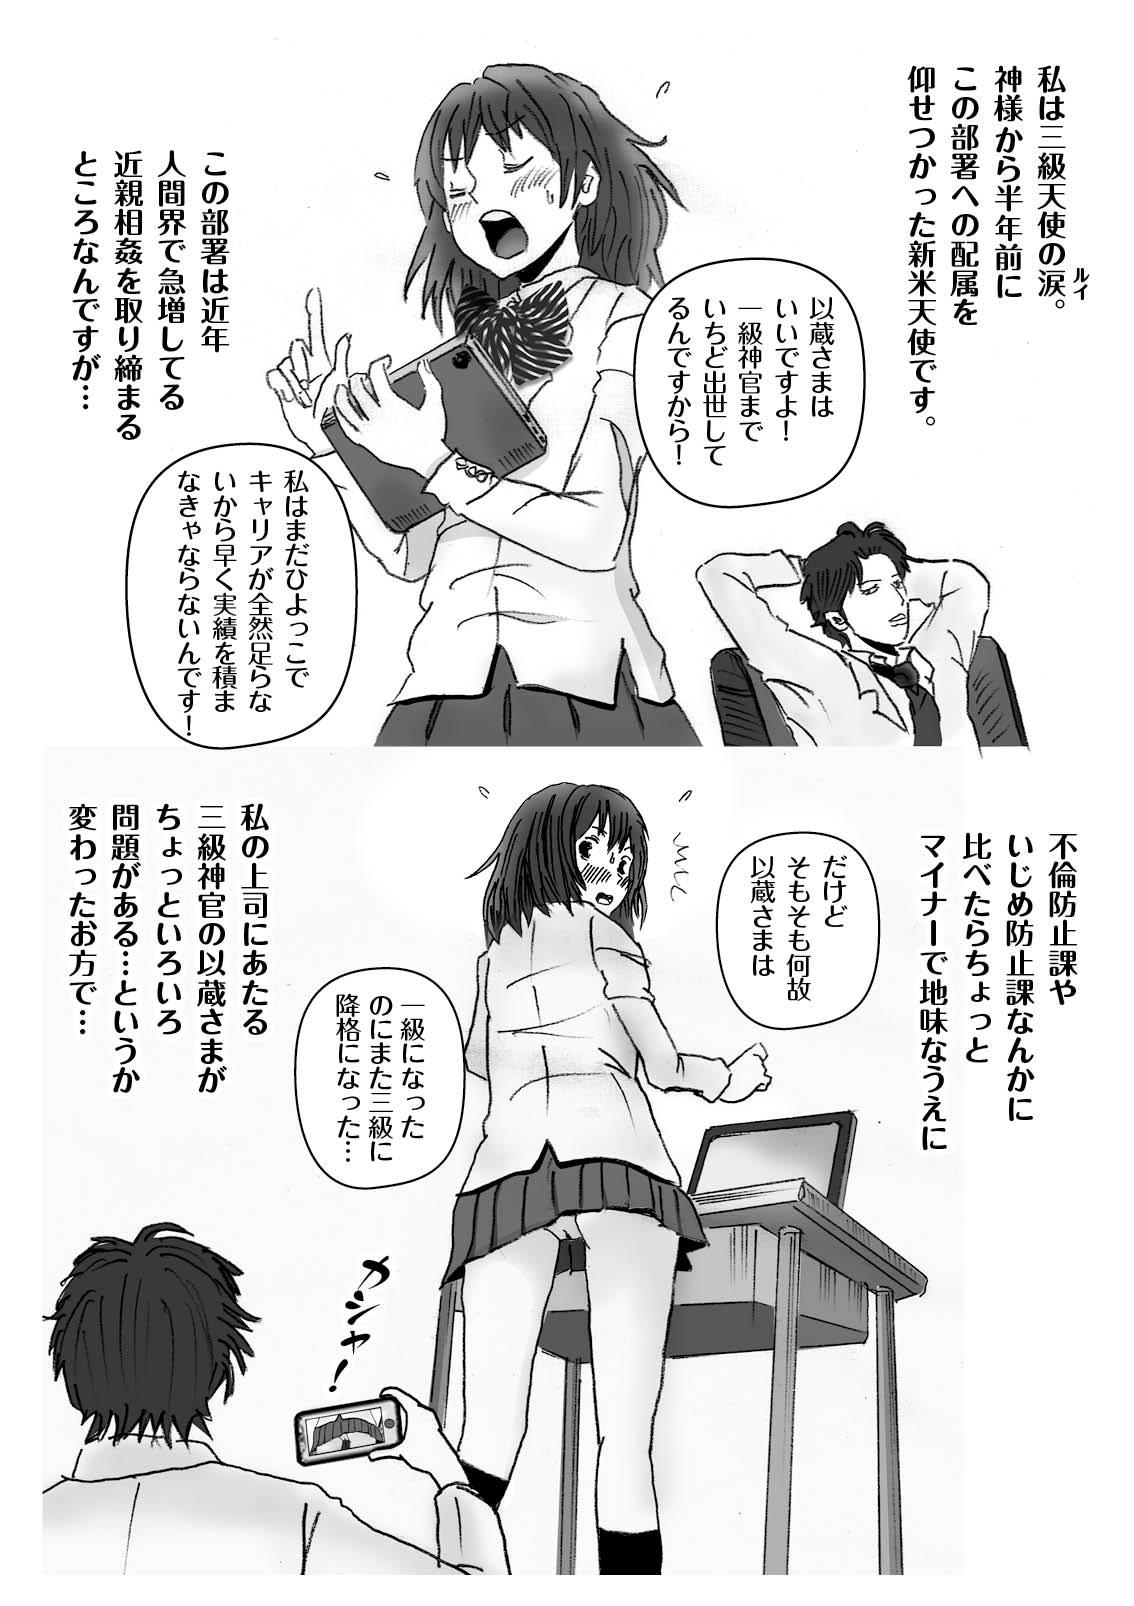 Butts Kochira tengoku! Konshinsōkan man'en bōshi-ka! - Original Olderwoman - Page 5